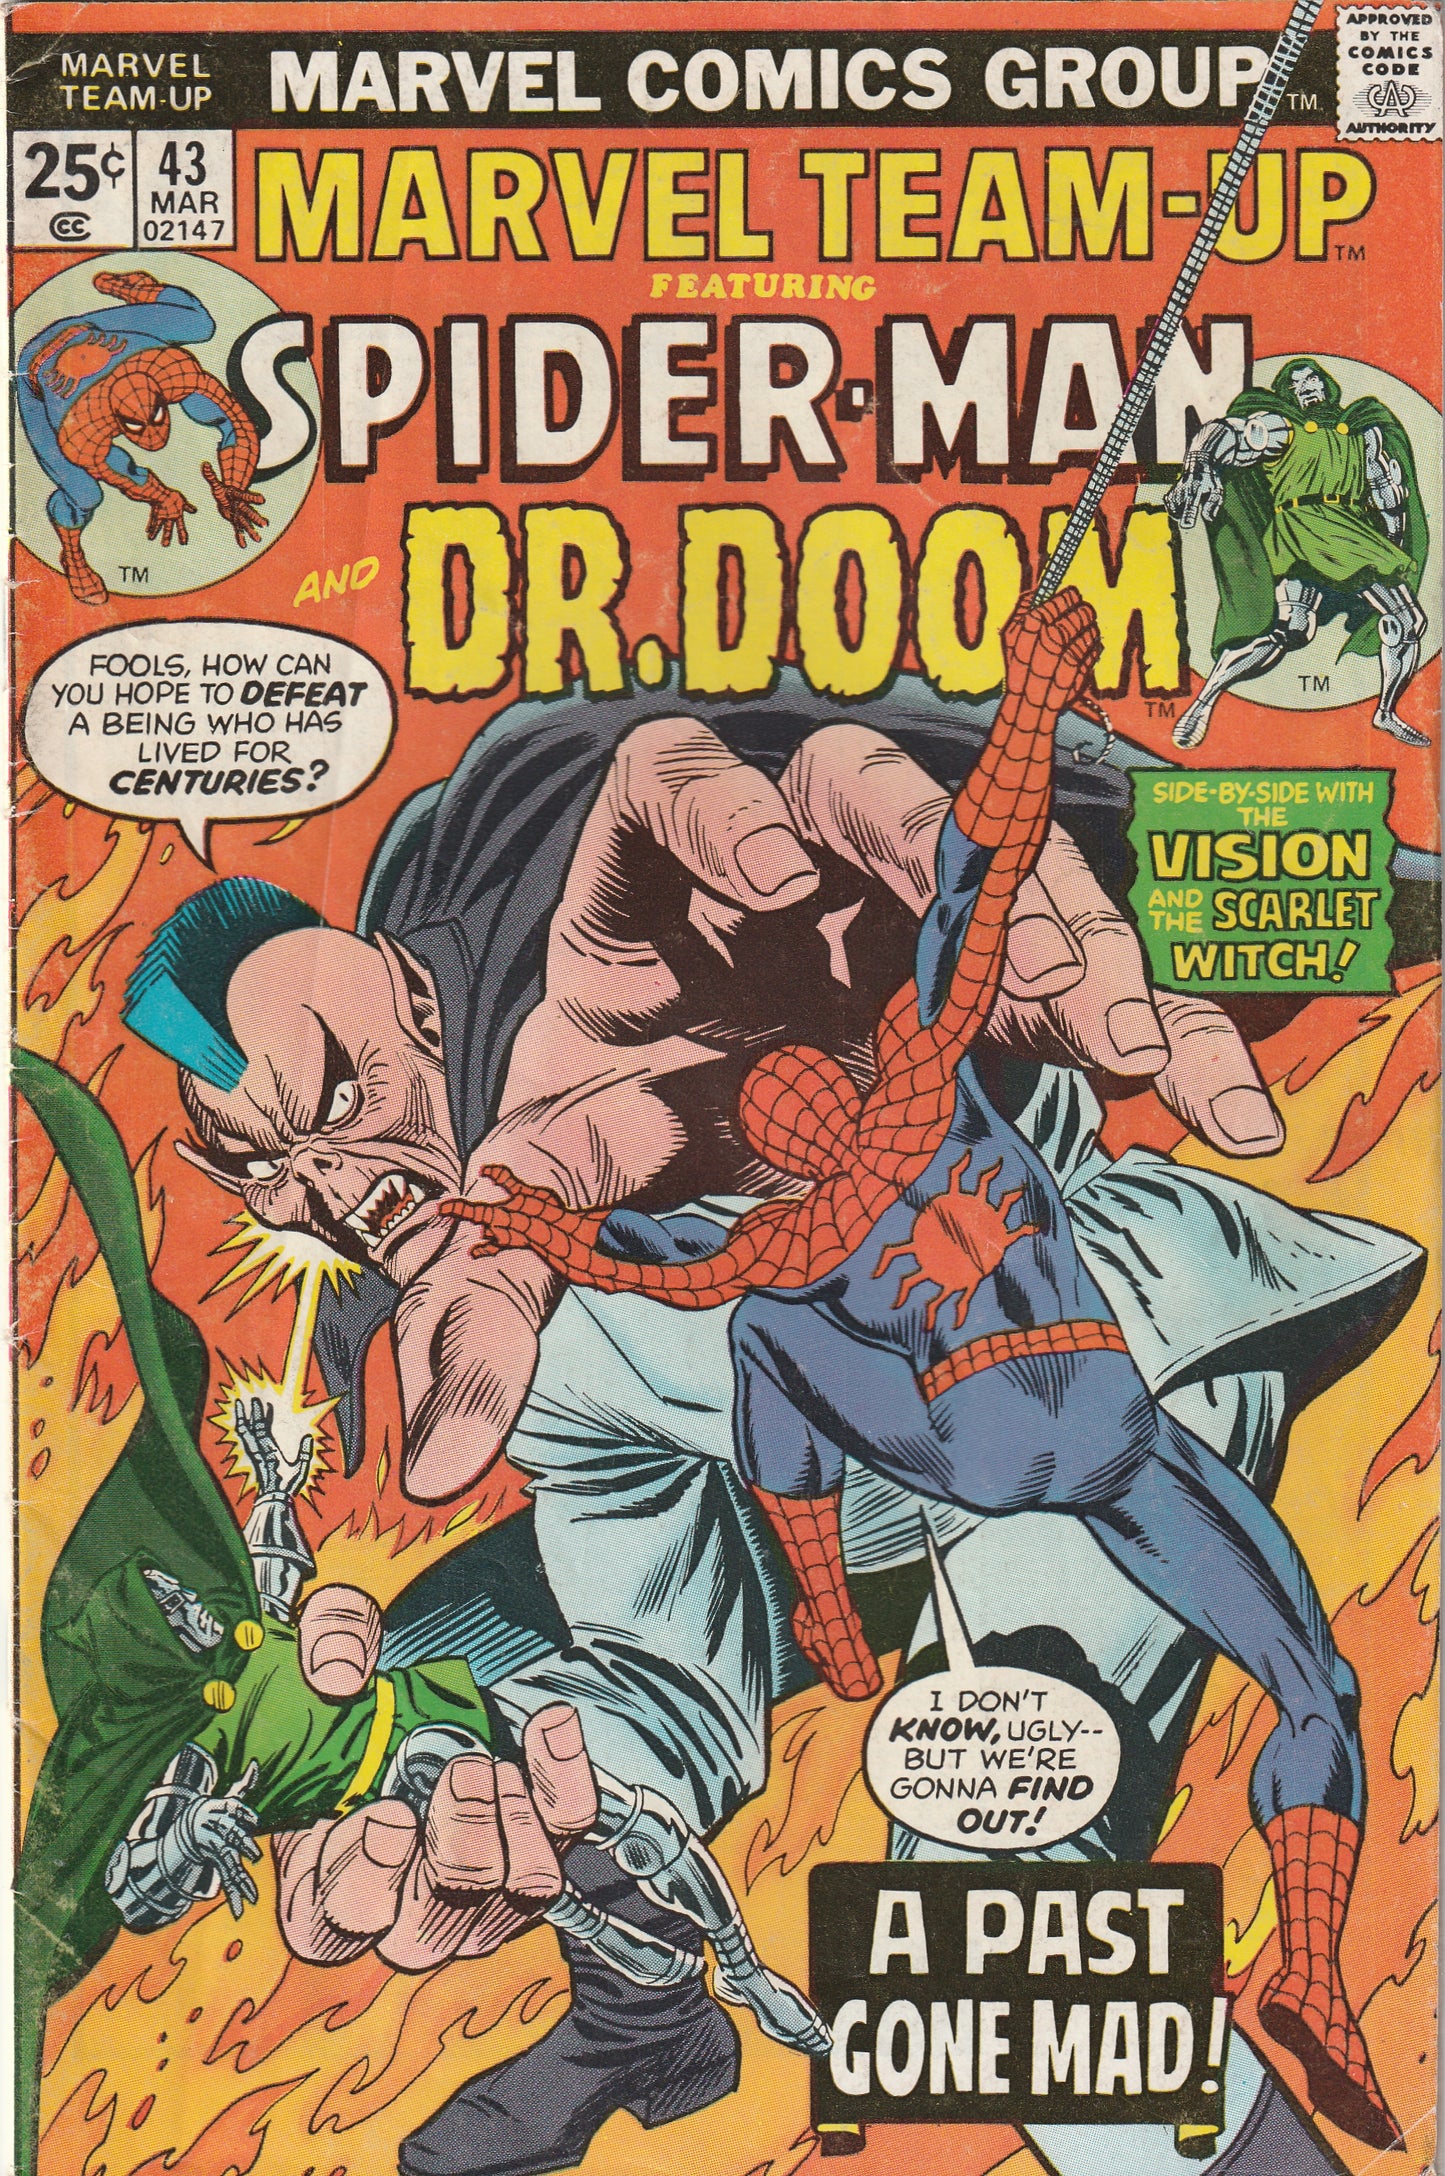 Marvel Team-Up #43 (1976) - Spider-Man & Dr. Doom - retells origin